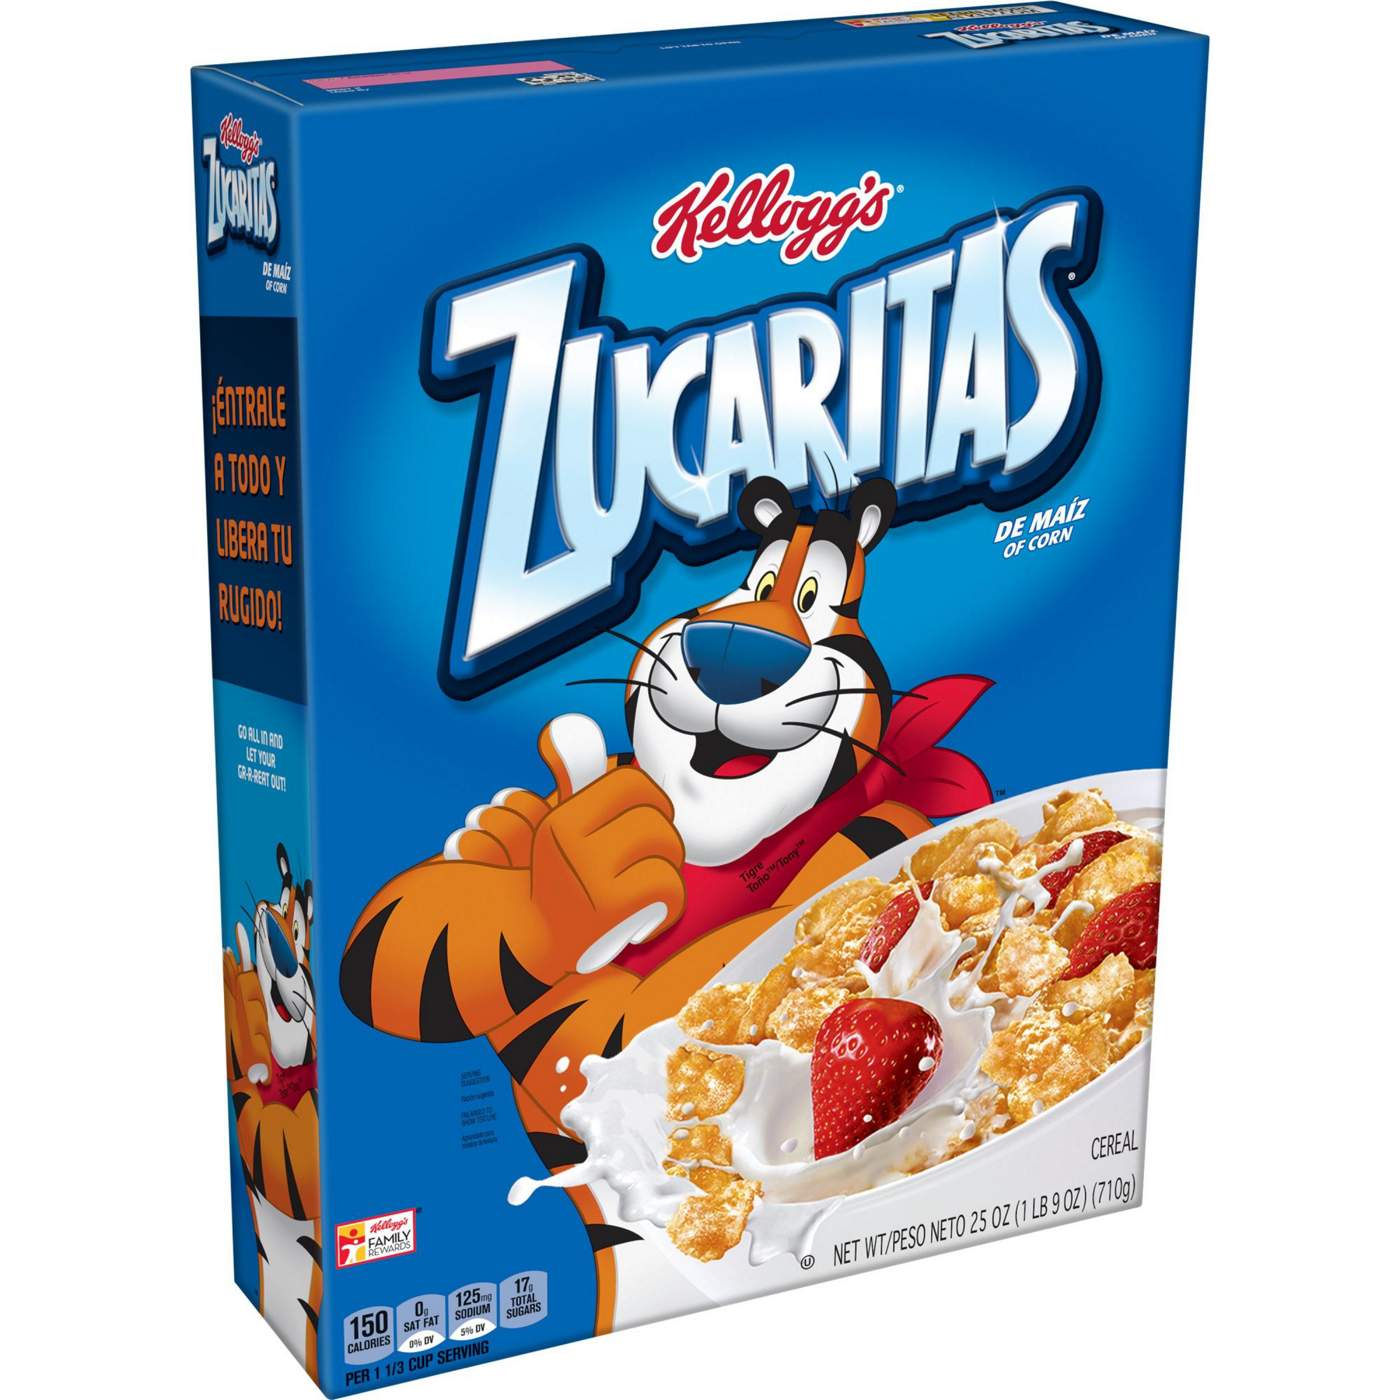 Kellogg's Zucaritas Original Cold Breakfast Cereal; image 1 of 3